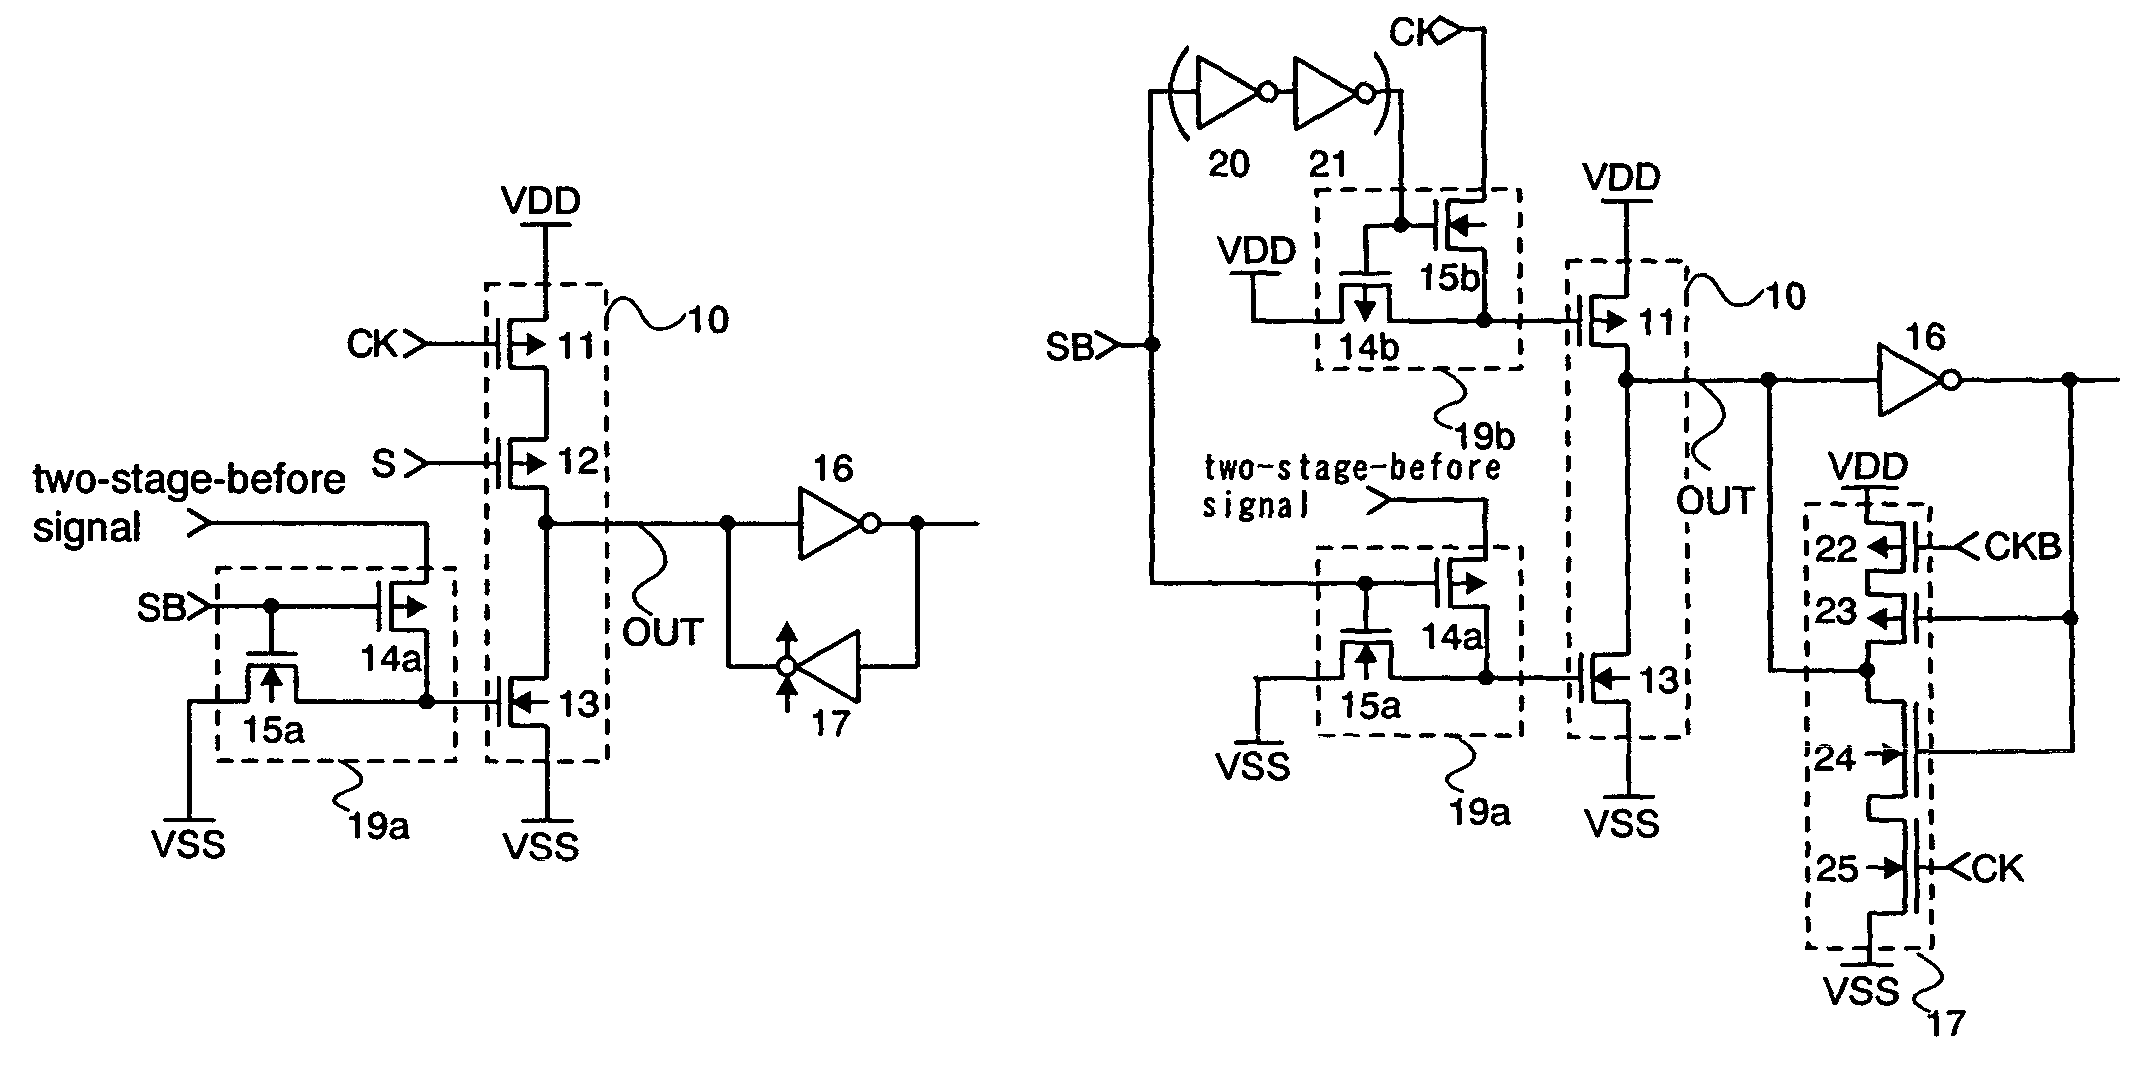 Clocked inverter, NAND, NOR and shift register